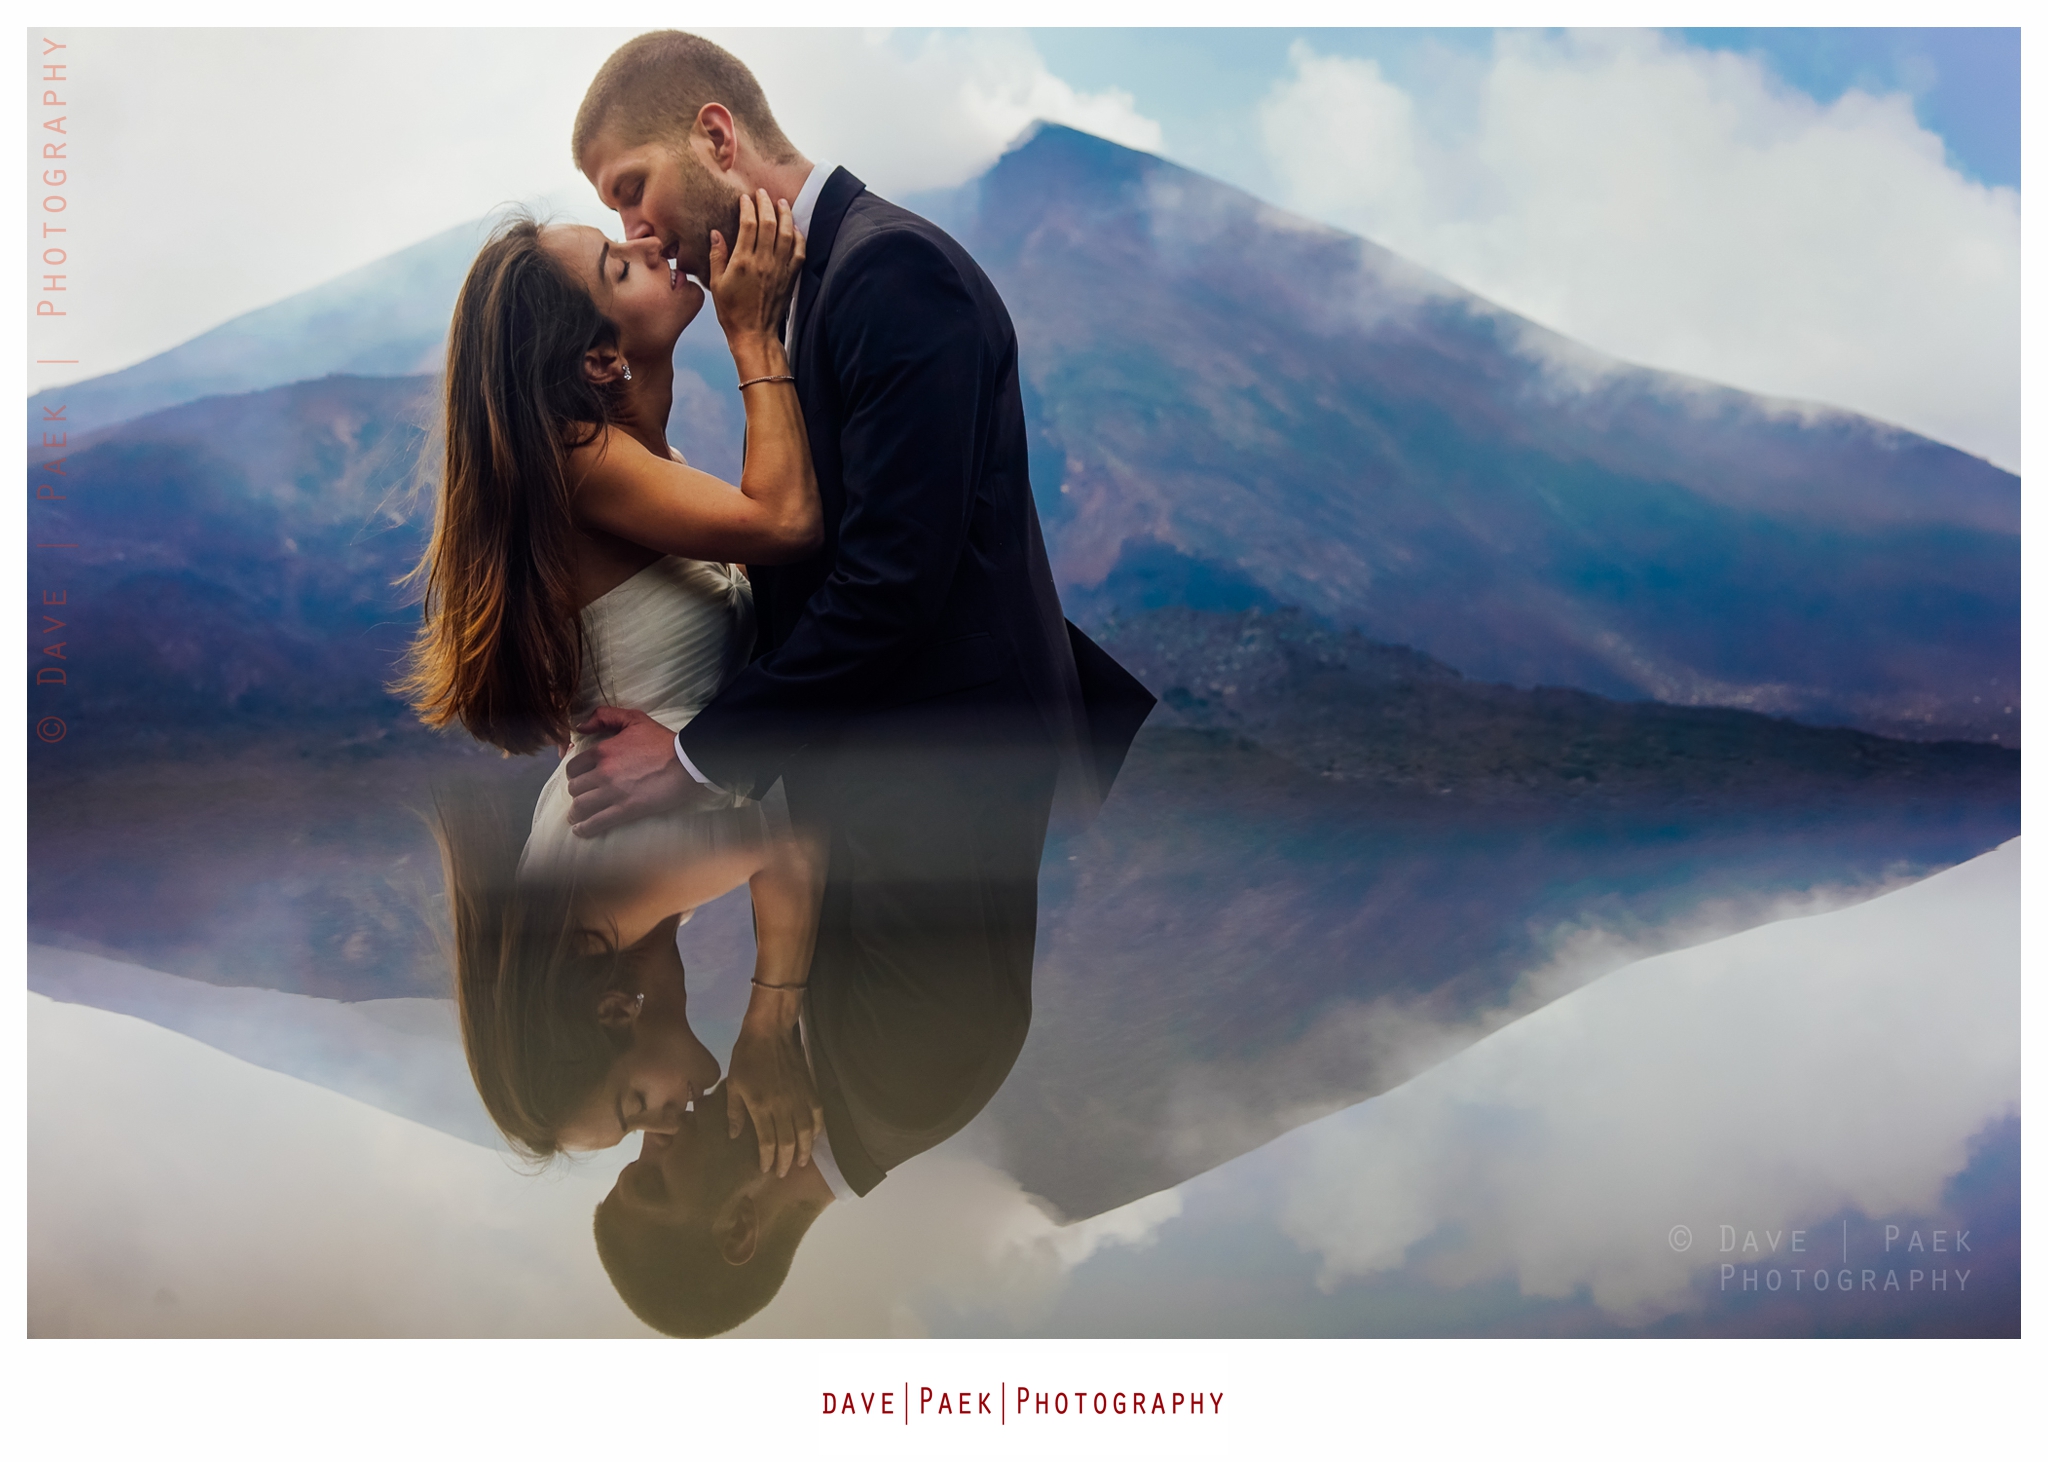 Best Antigua Destination Wedding Photos Mount Pacaya Volcano